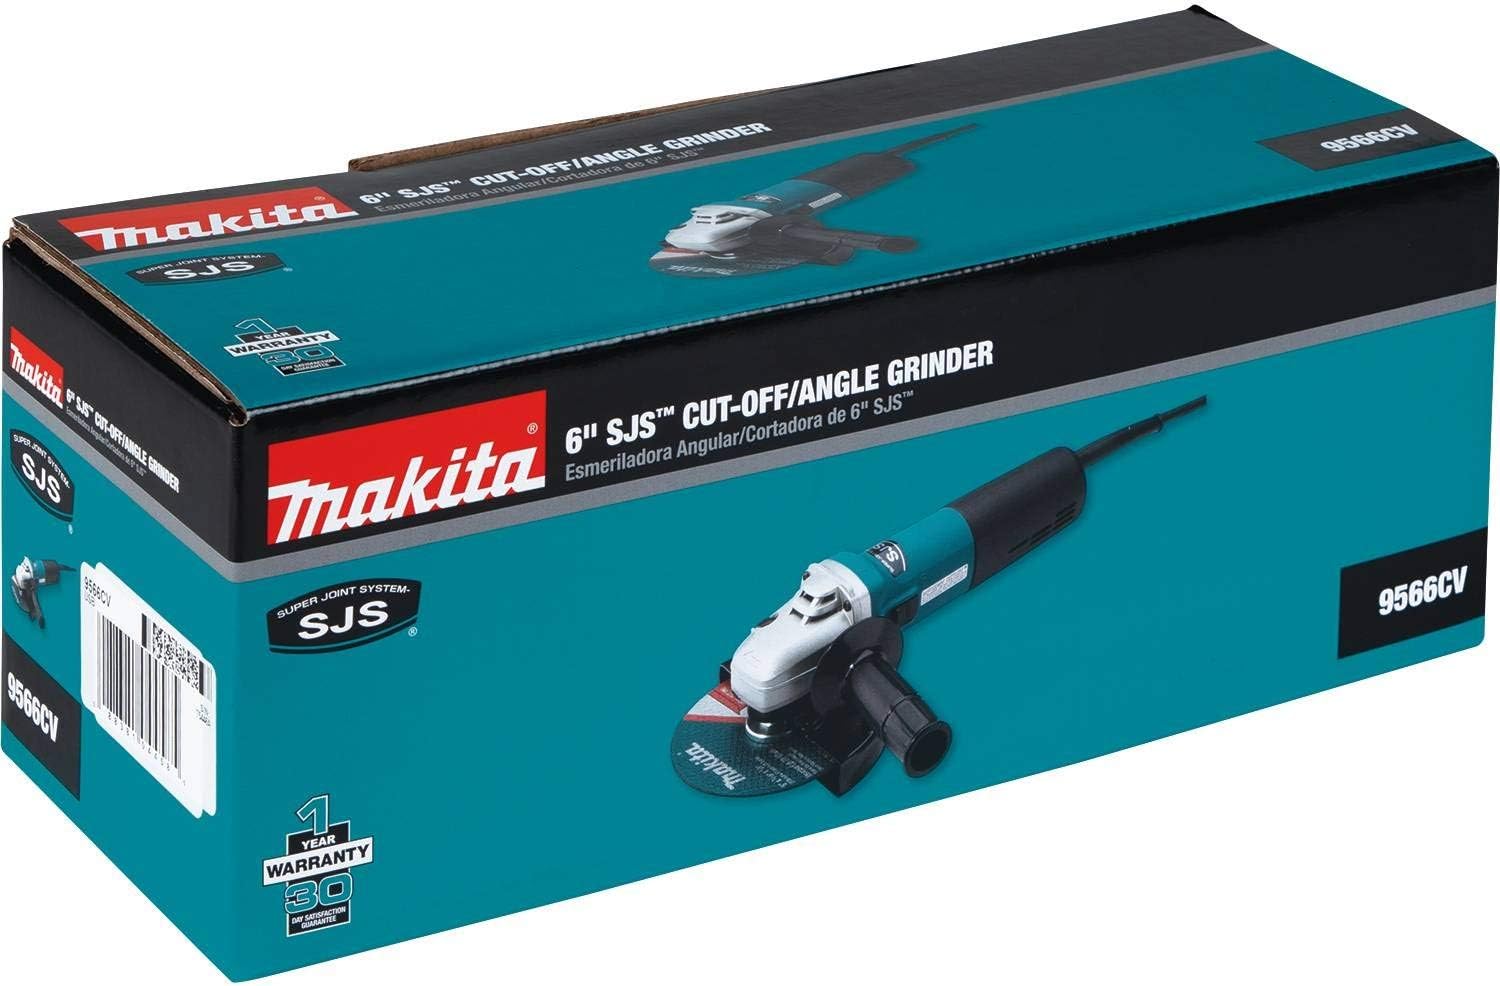 Makita 9566CV 6 SJS™ High-Power Cut-Off/Angle Grinder